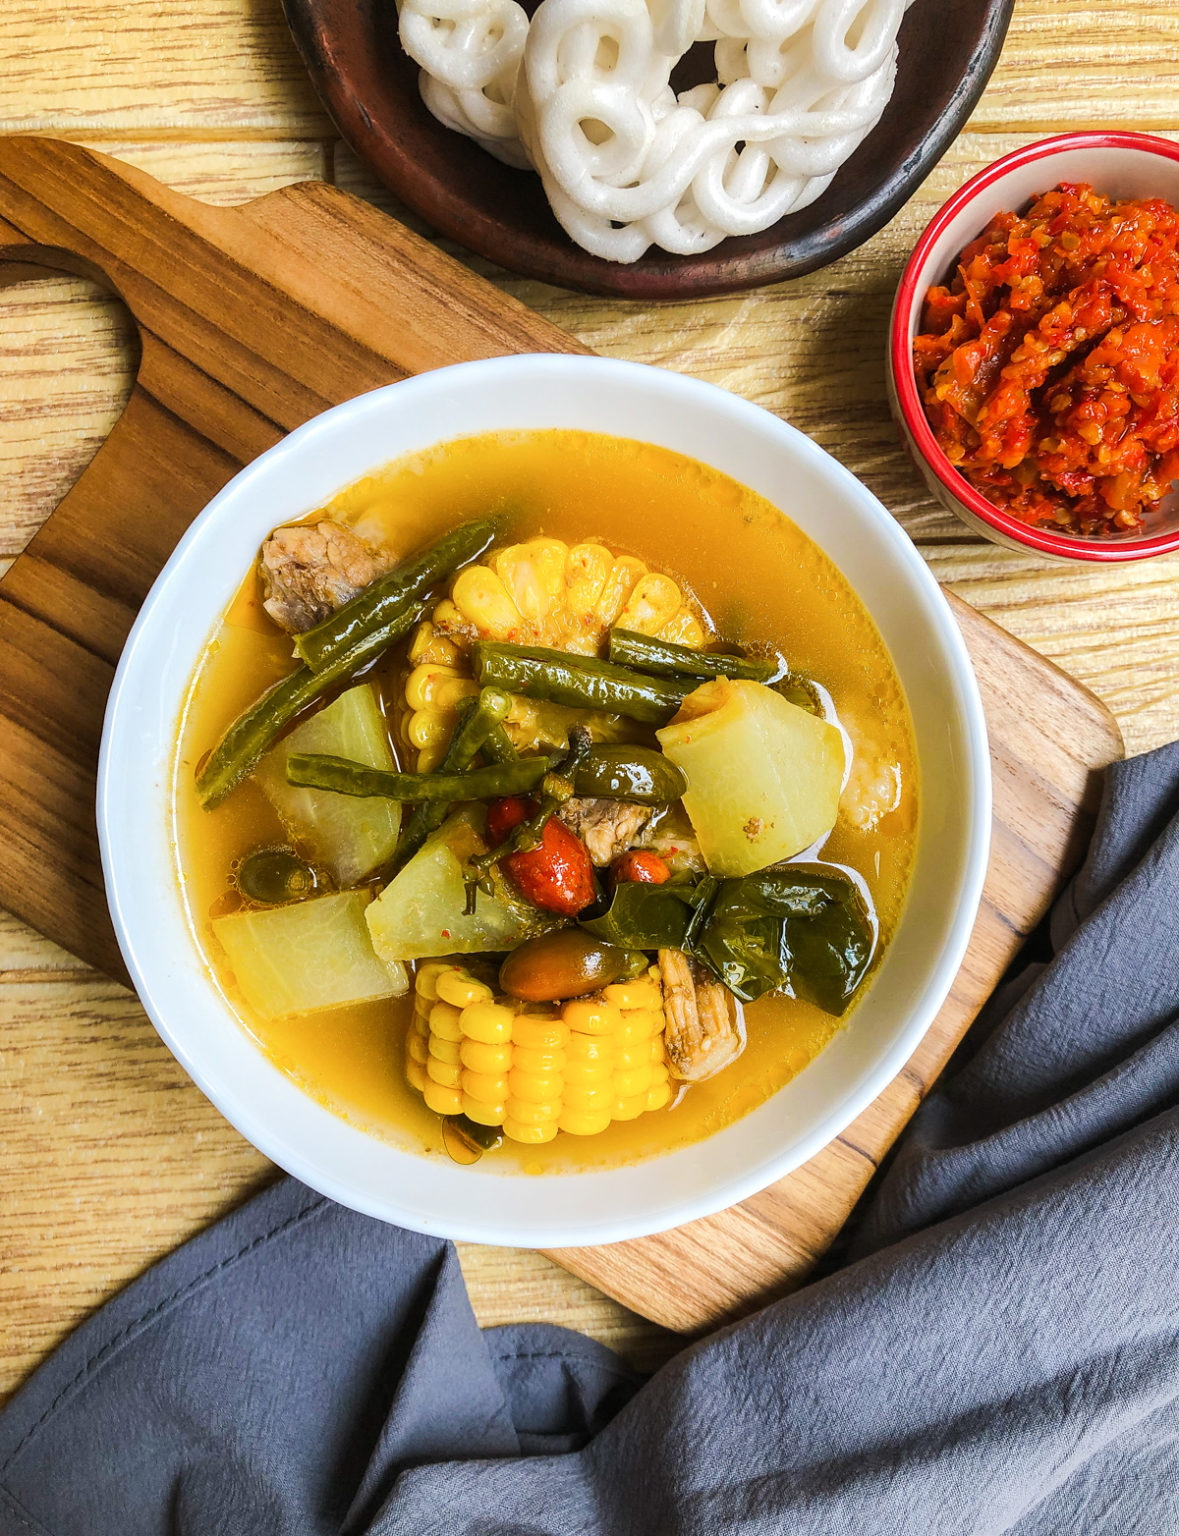 Photo Sayur Asem - Vegetables in Tamarind Soup from Palu City